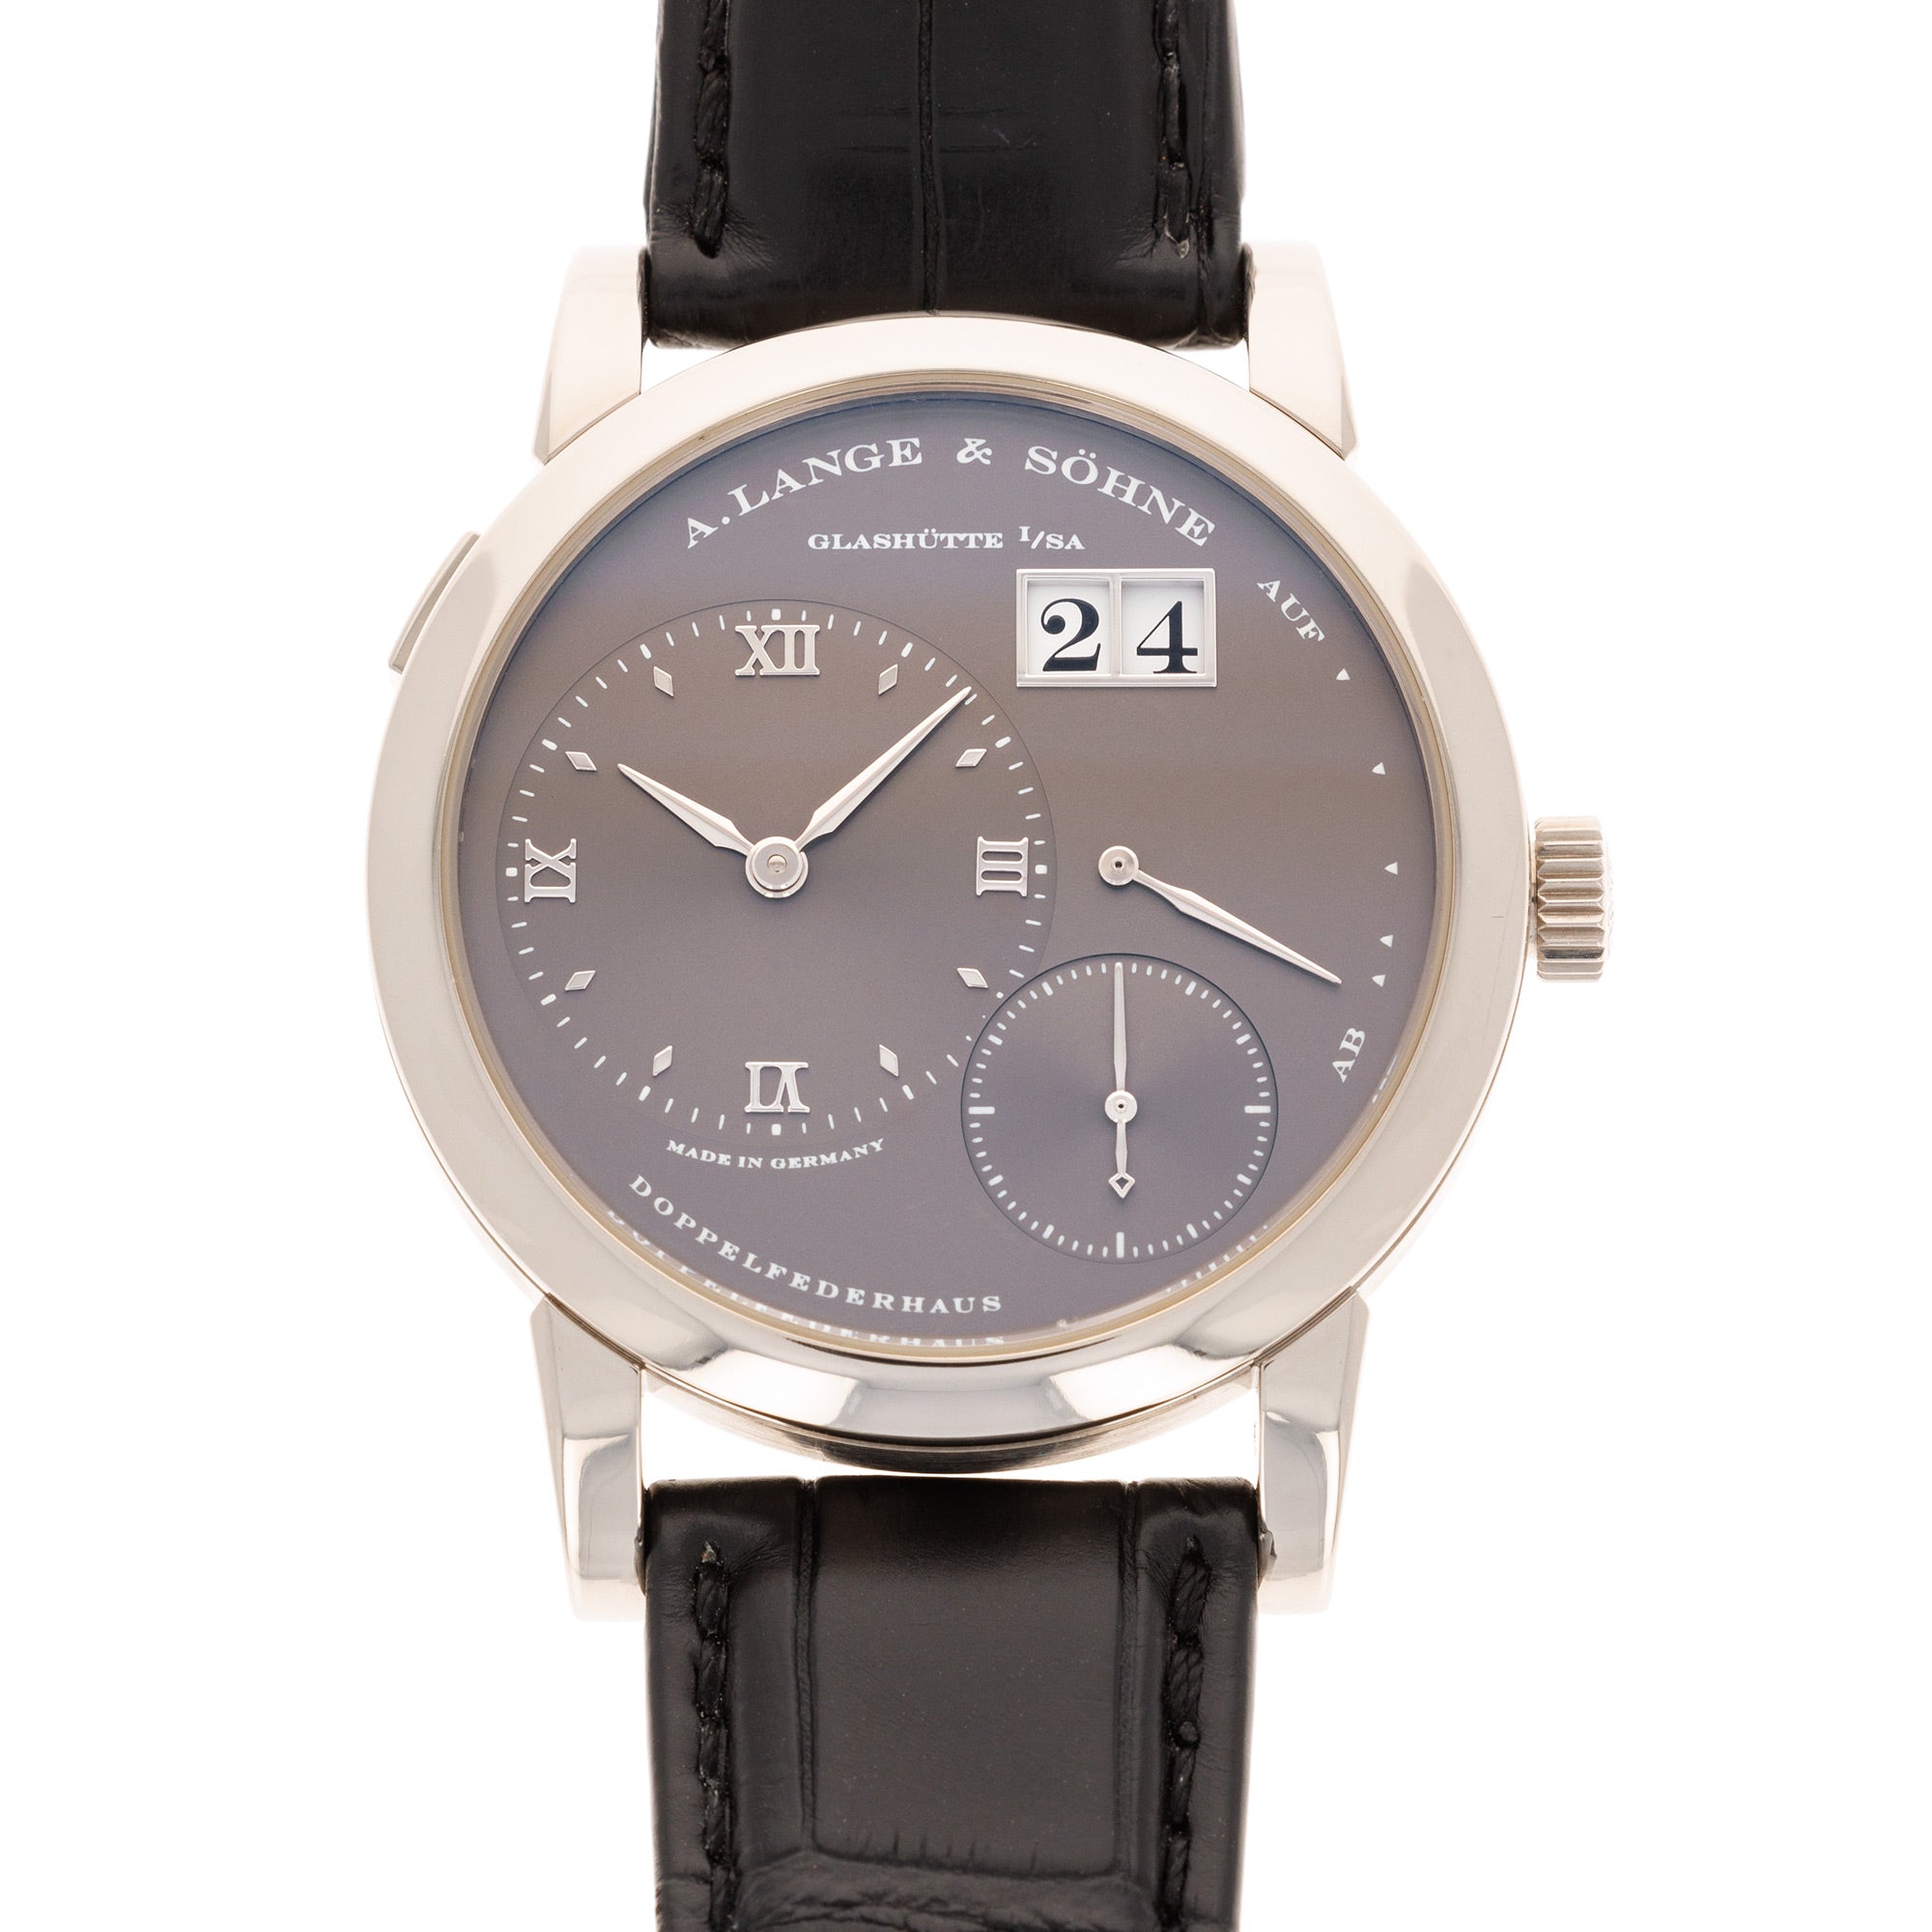 A. Lange & Sohne - A. Lange & Sohne White Gold Lange 1 Ref. 101.030 - The Keystone Watches